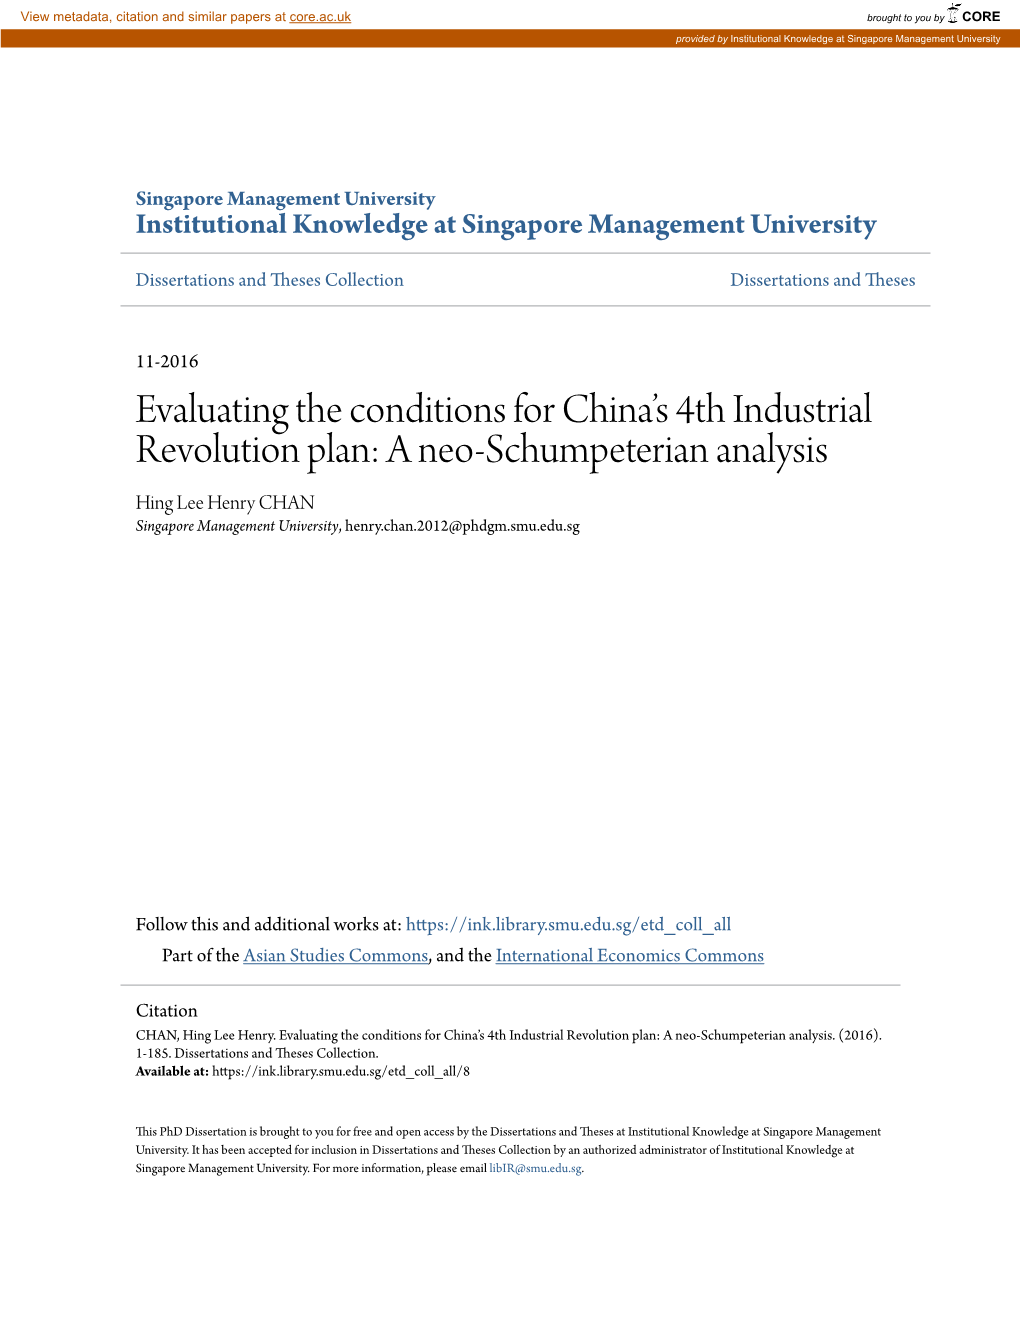 A Neo-Schumpeterian Analysis Hing Lee Henry CHAN Singapore Management University, Henry.Chan.2012@Phdgm.Smu.Edu.Sg